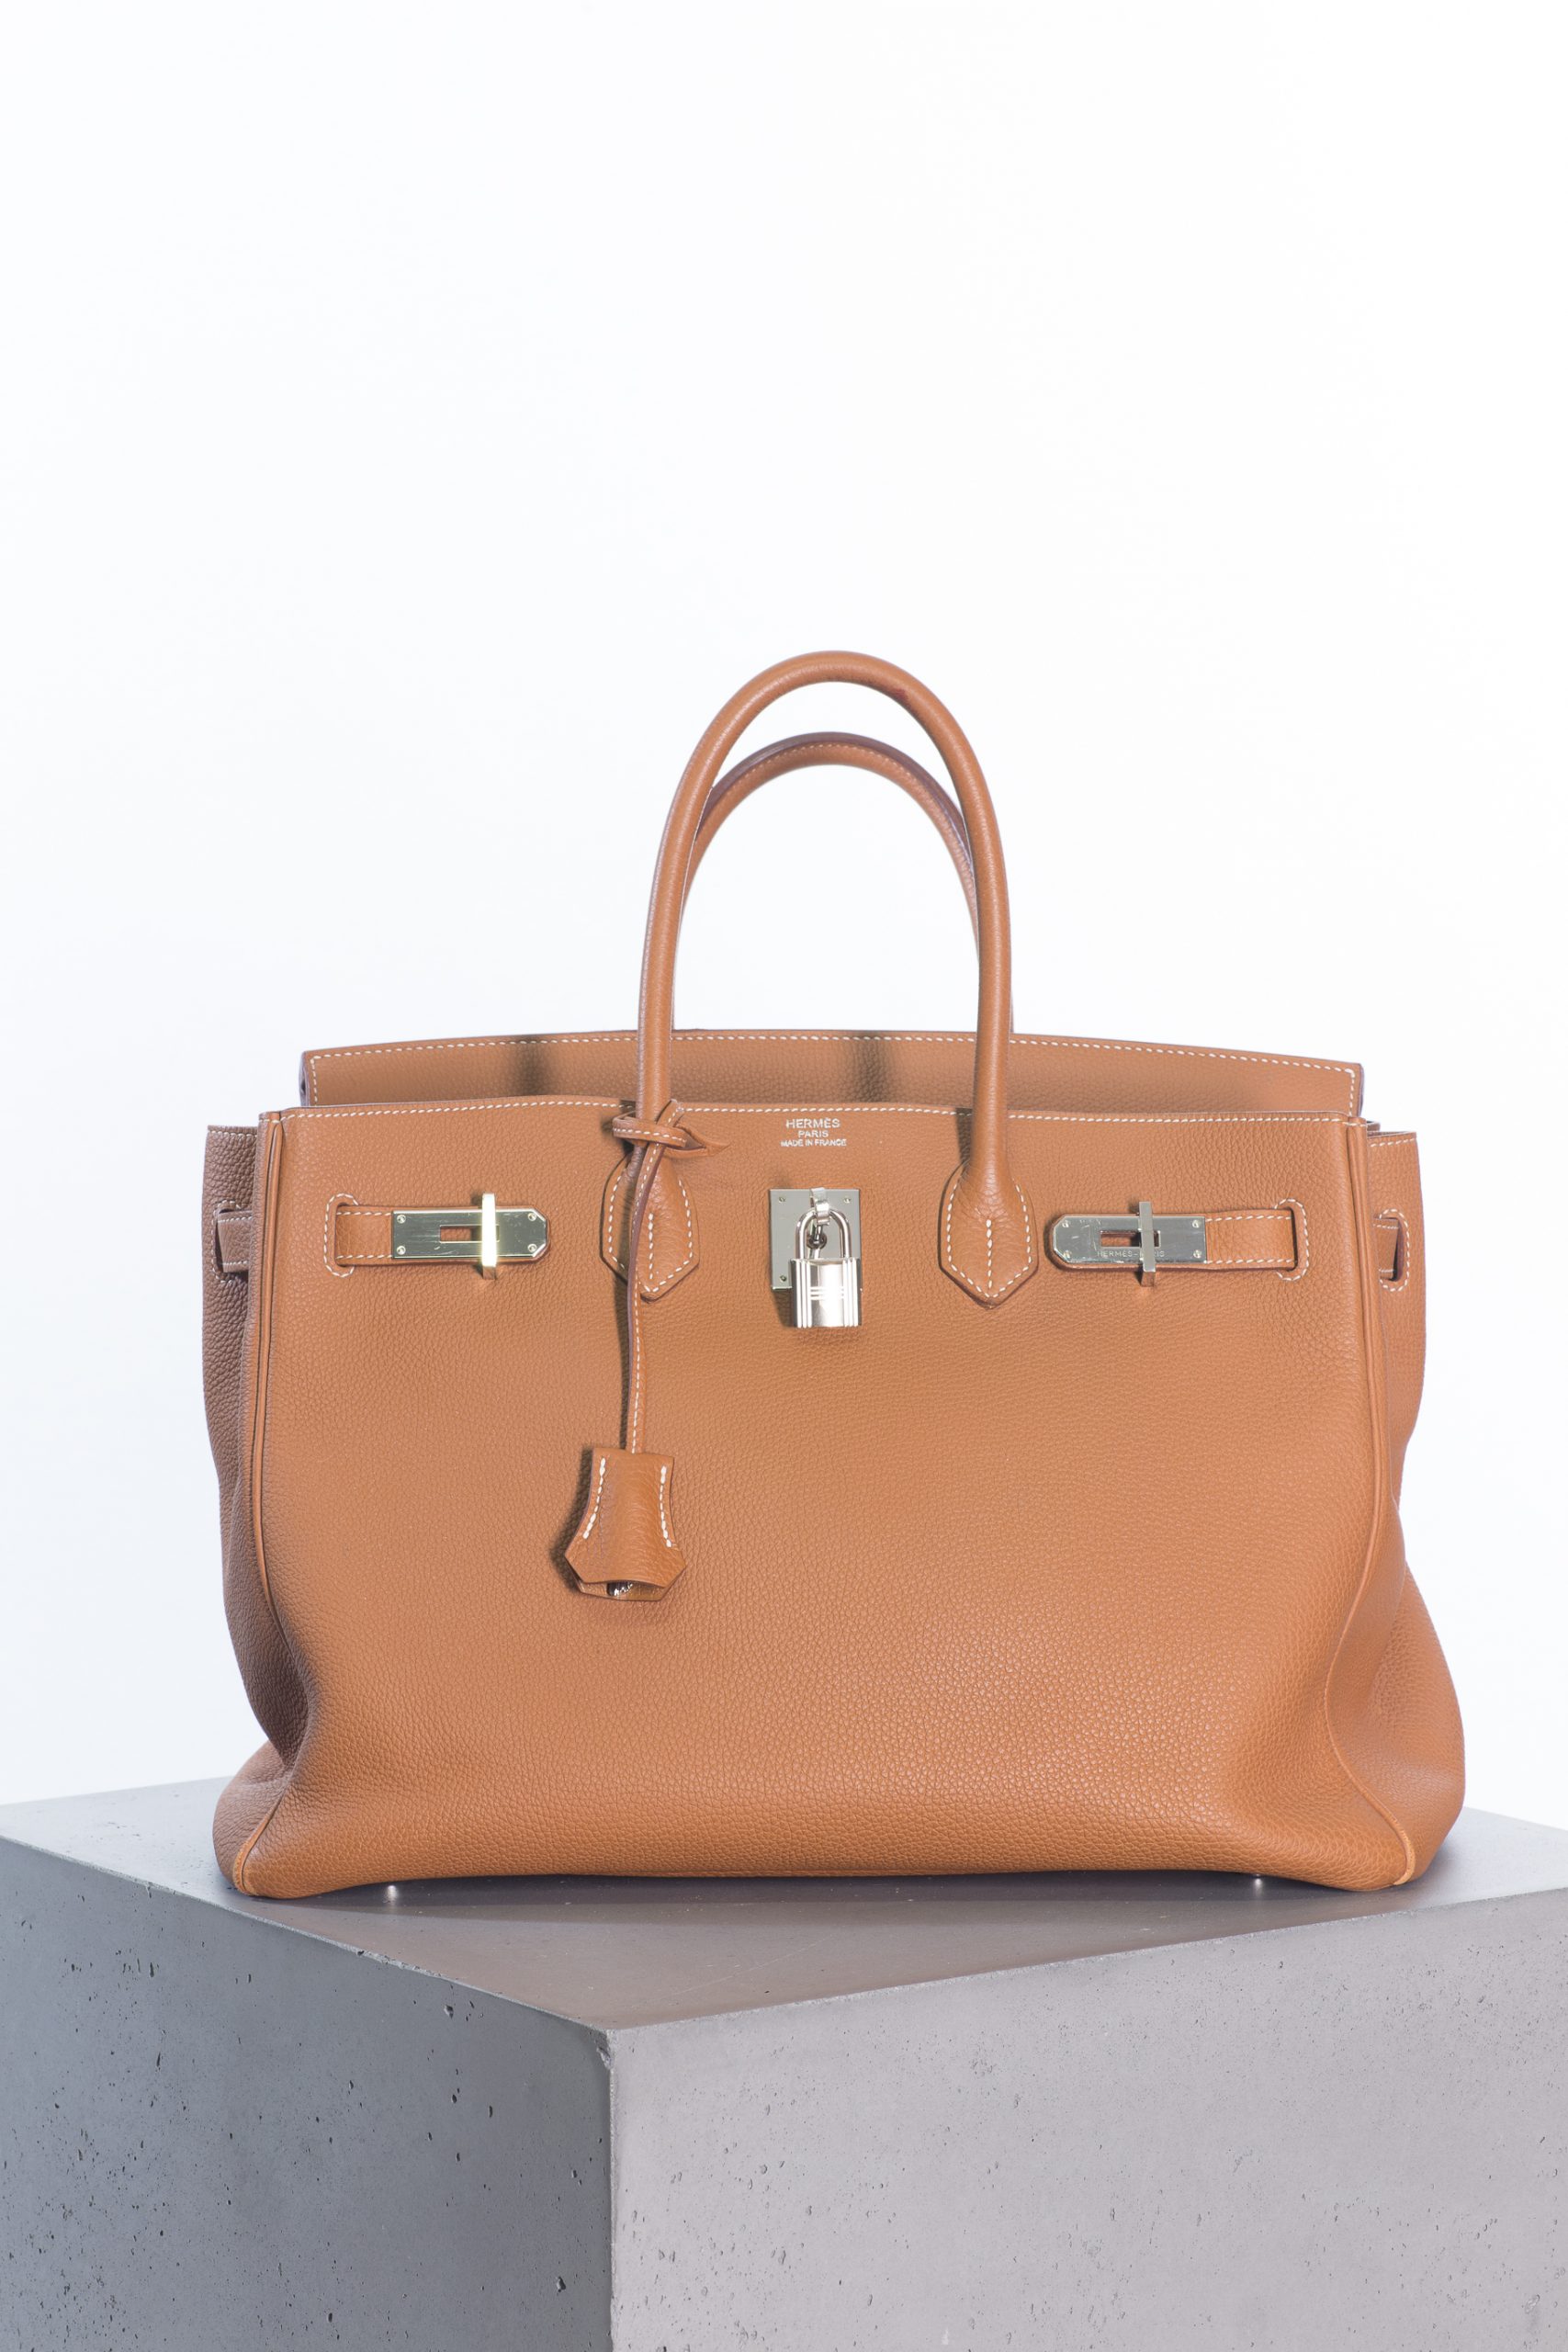 Hermes bag - Huntessa Luxury Online Consignment Boutique